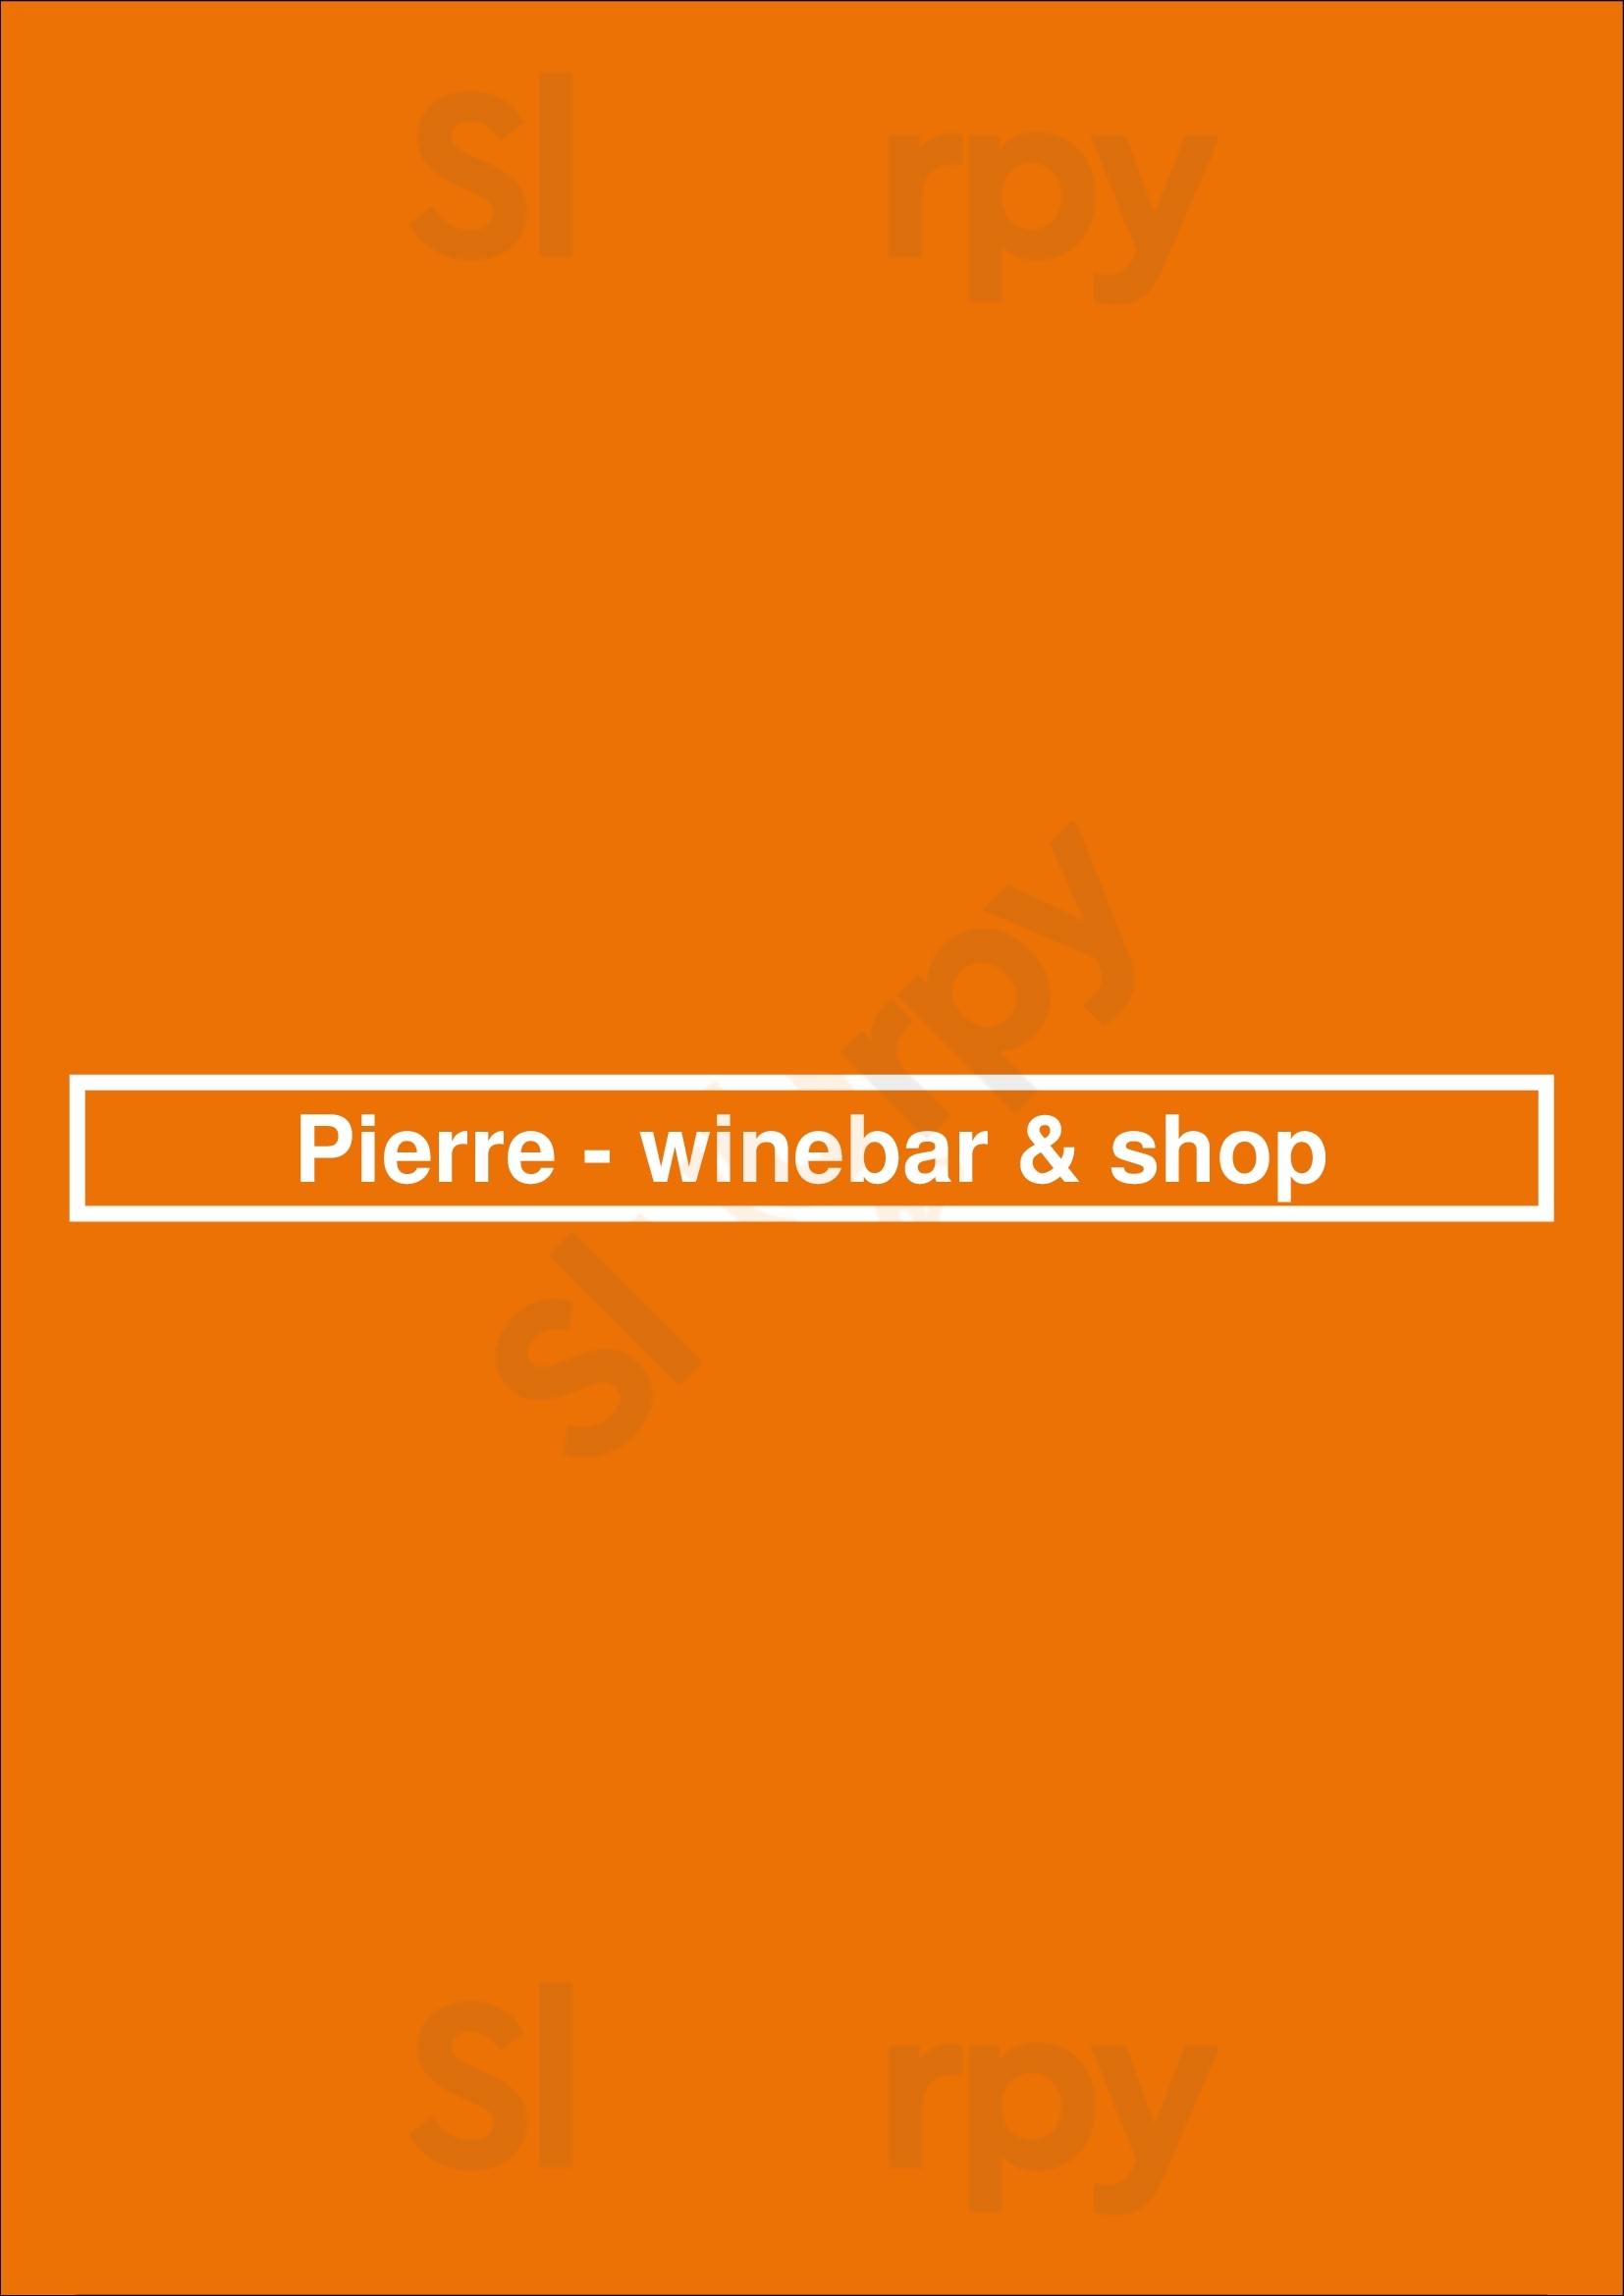 Pierre - Winebar & Shop Den Haag Menu - 1